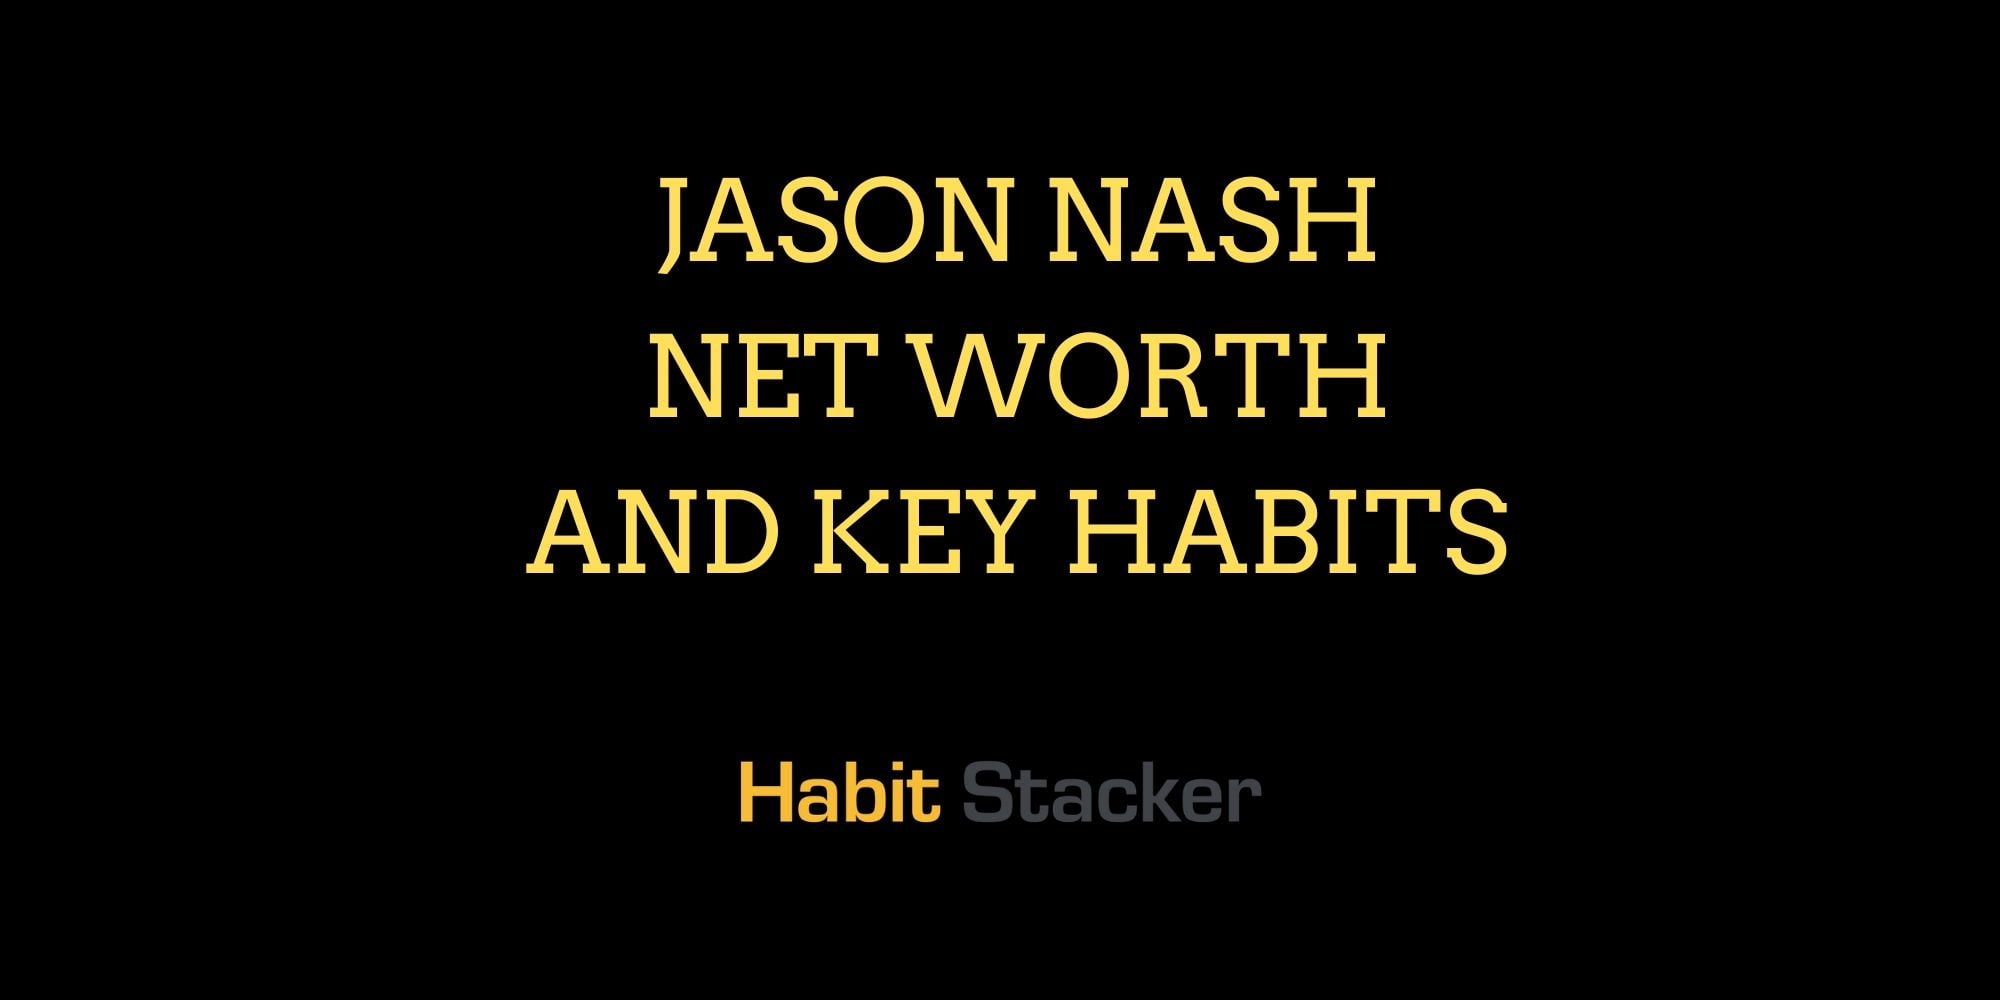 Jason Nash Net Worth